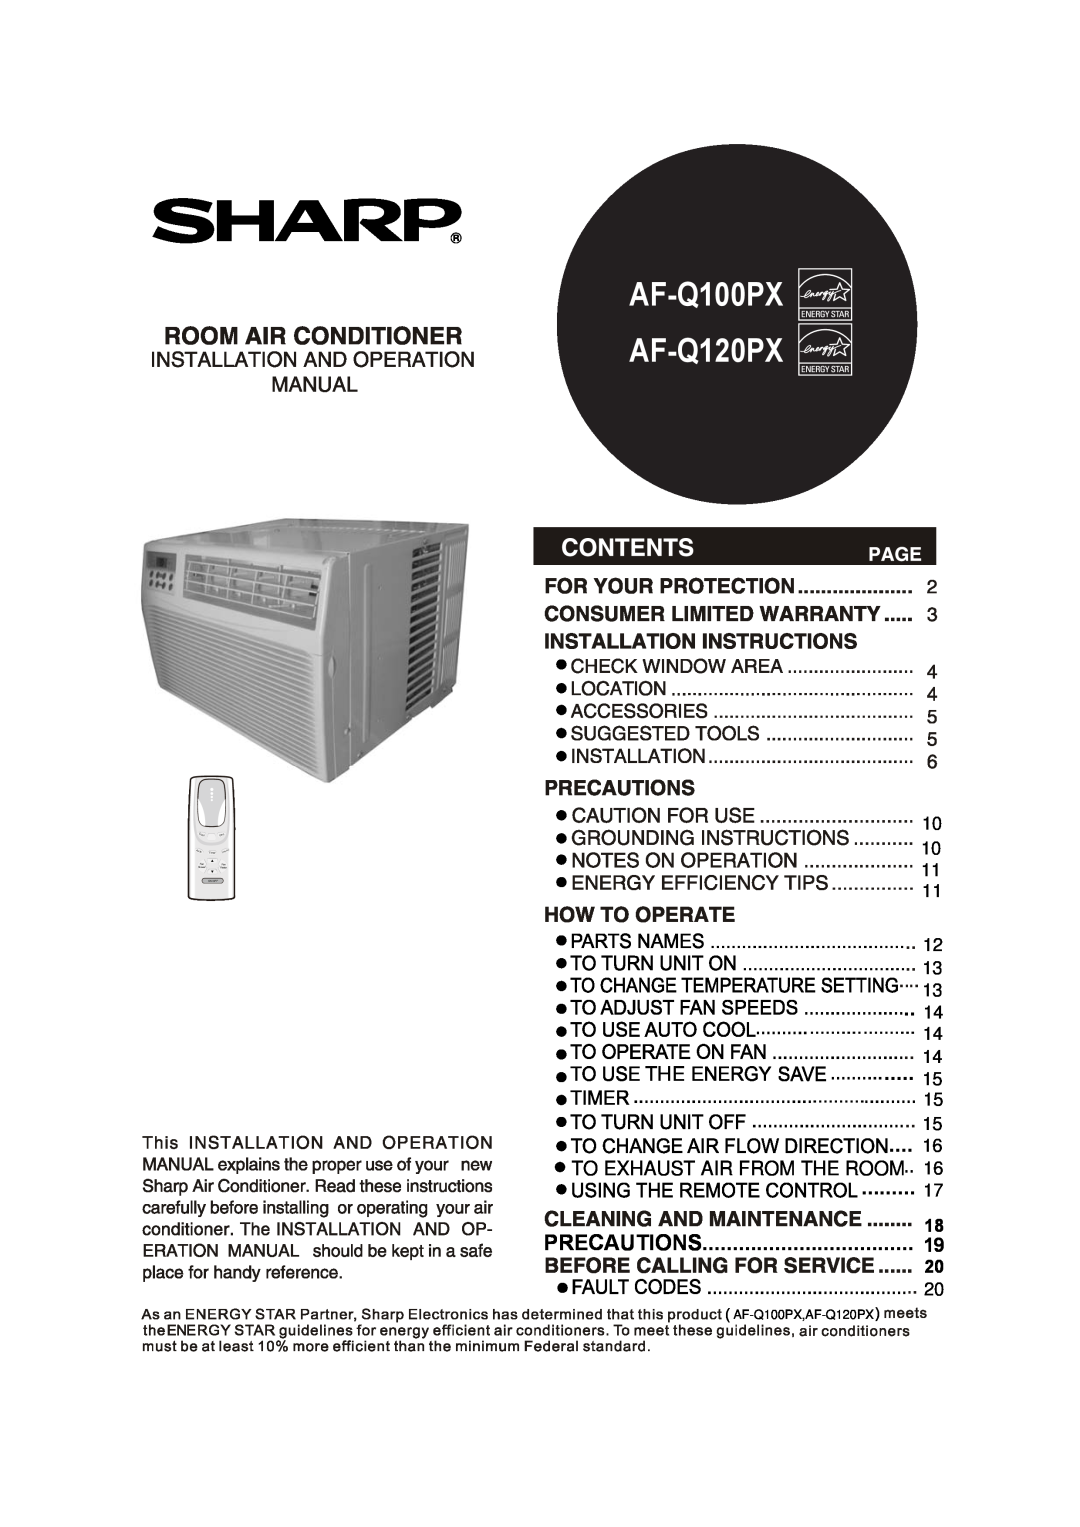 Sharp manual 1314, Precautions, AF-Q100PX AF-Q120PX 